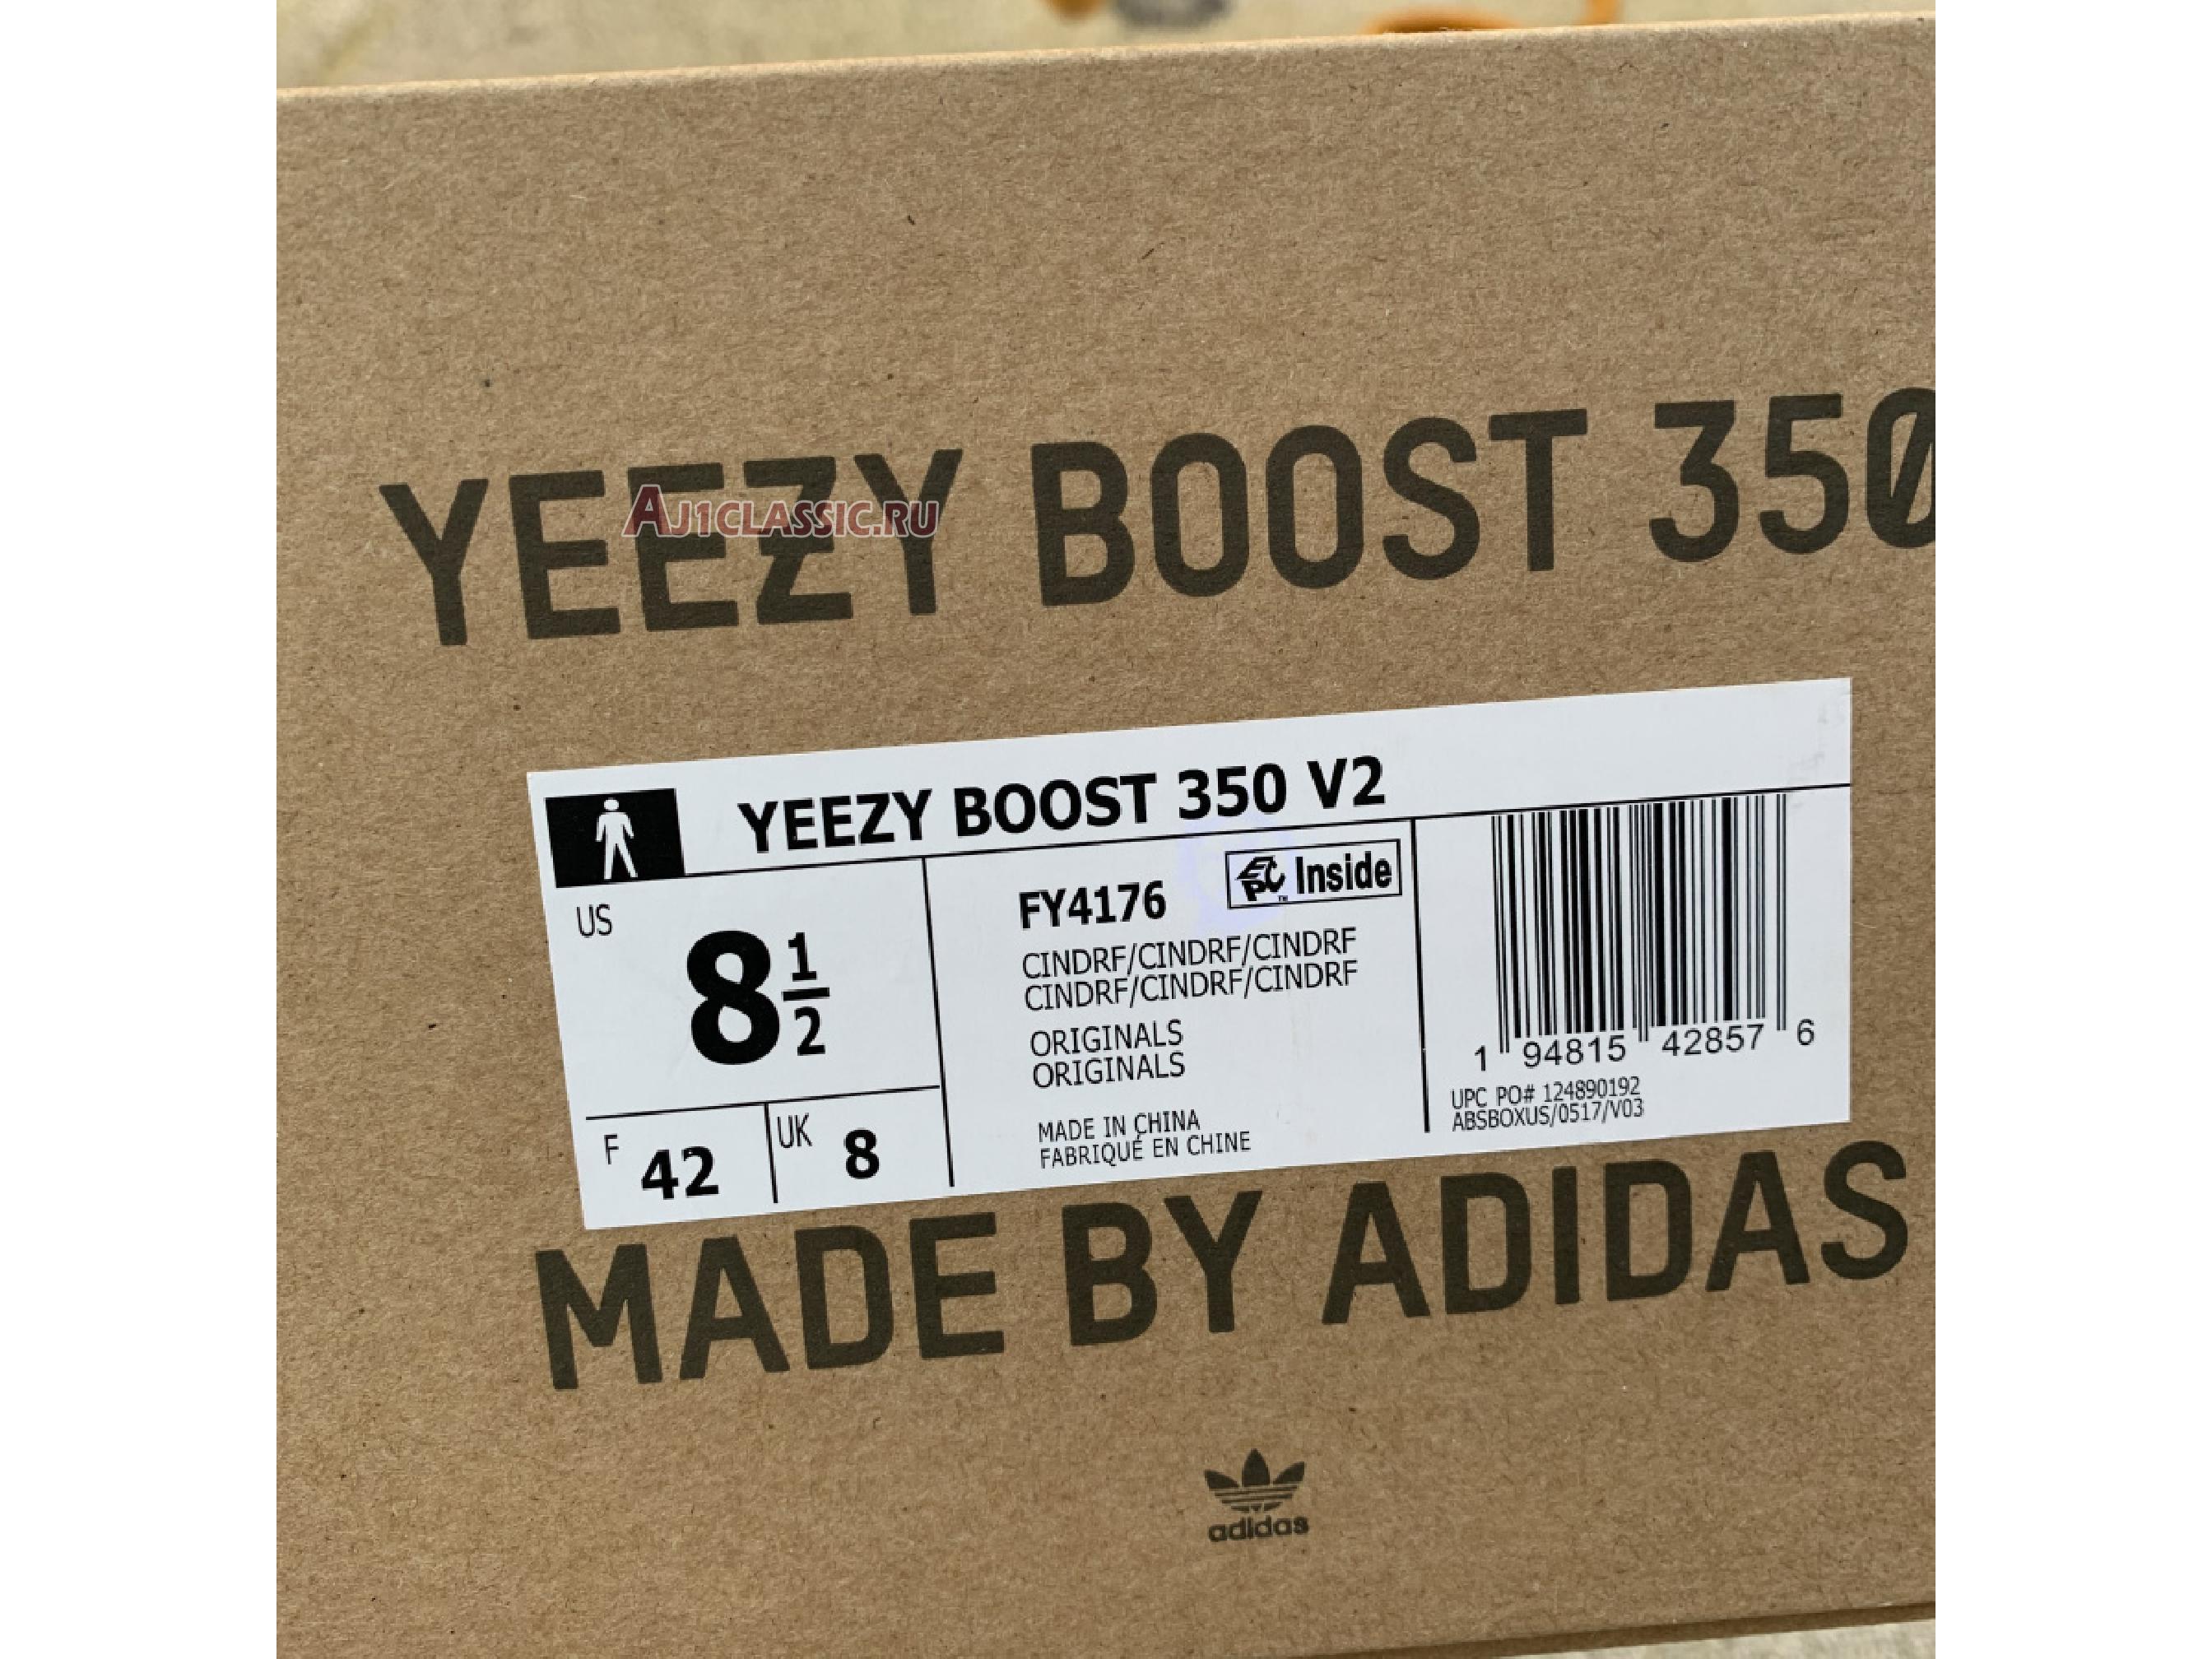 Adidas Yeezy Boost 350 V2 "Cinder Reflective" FY4176